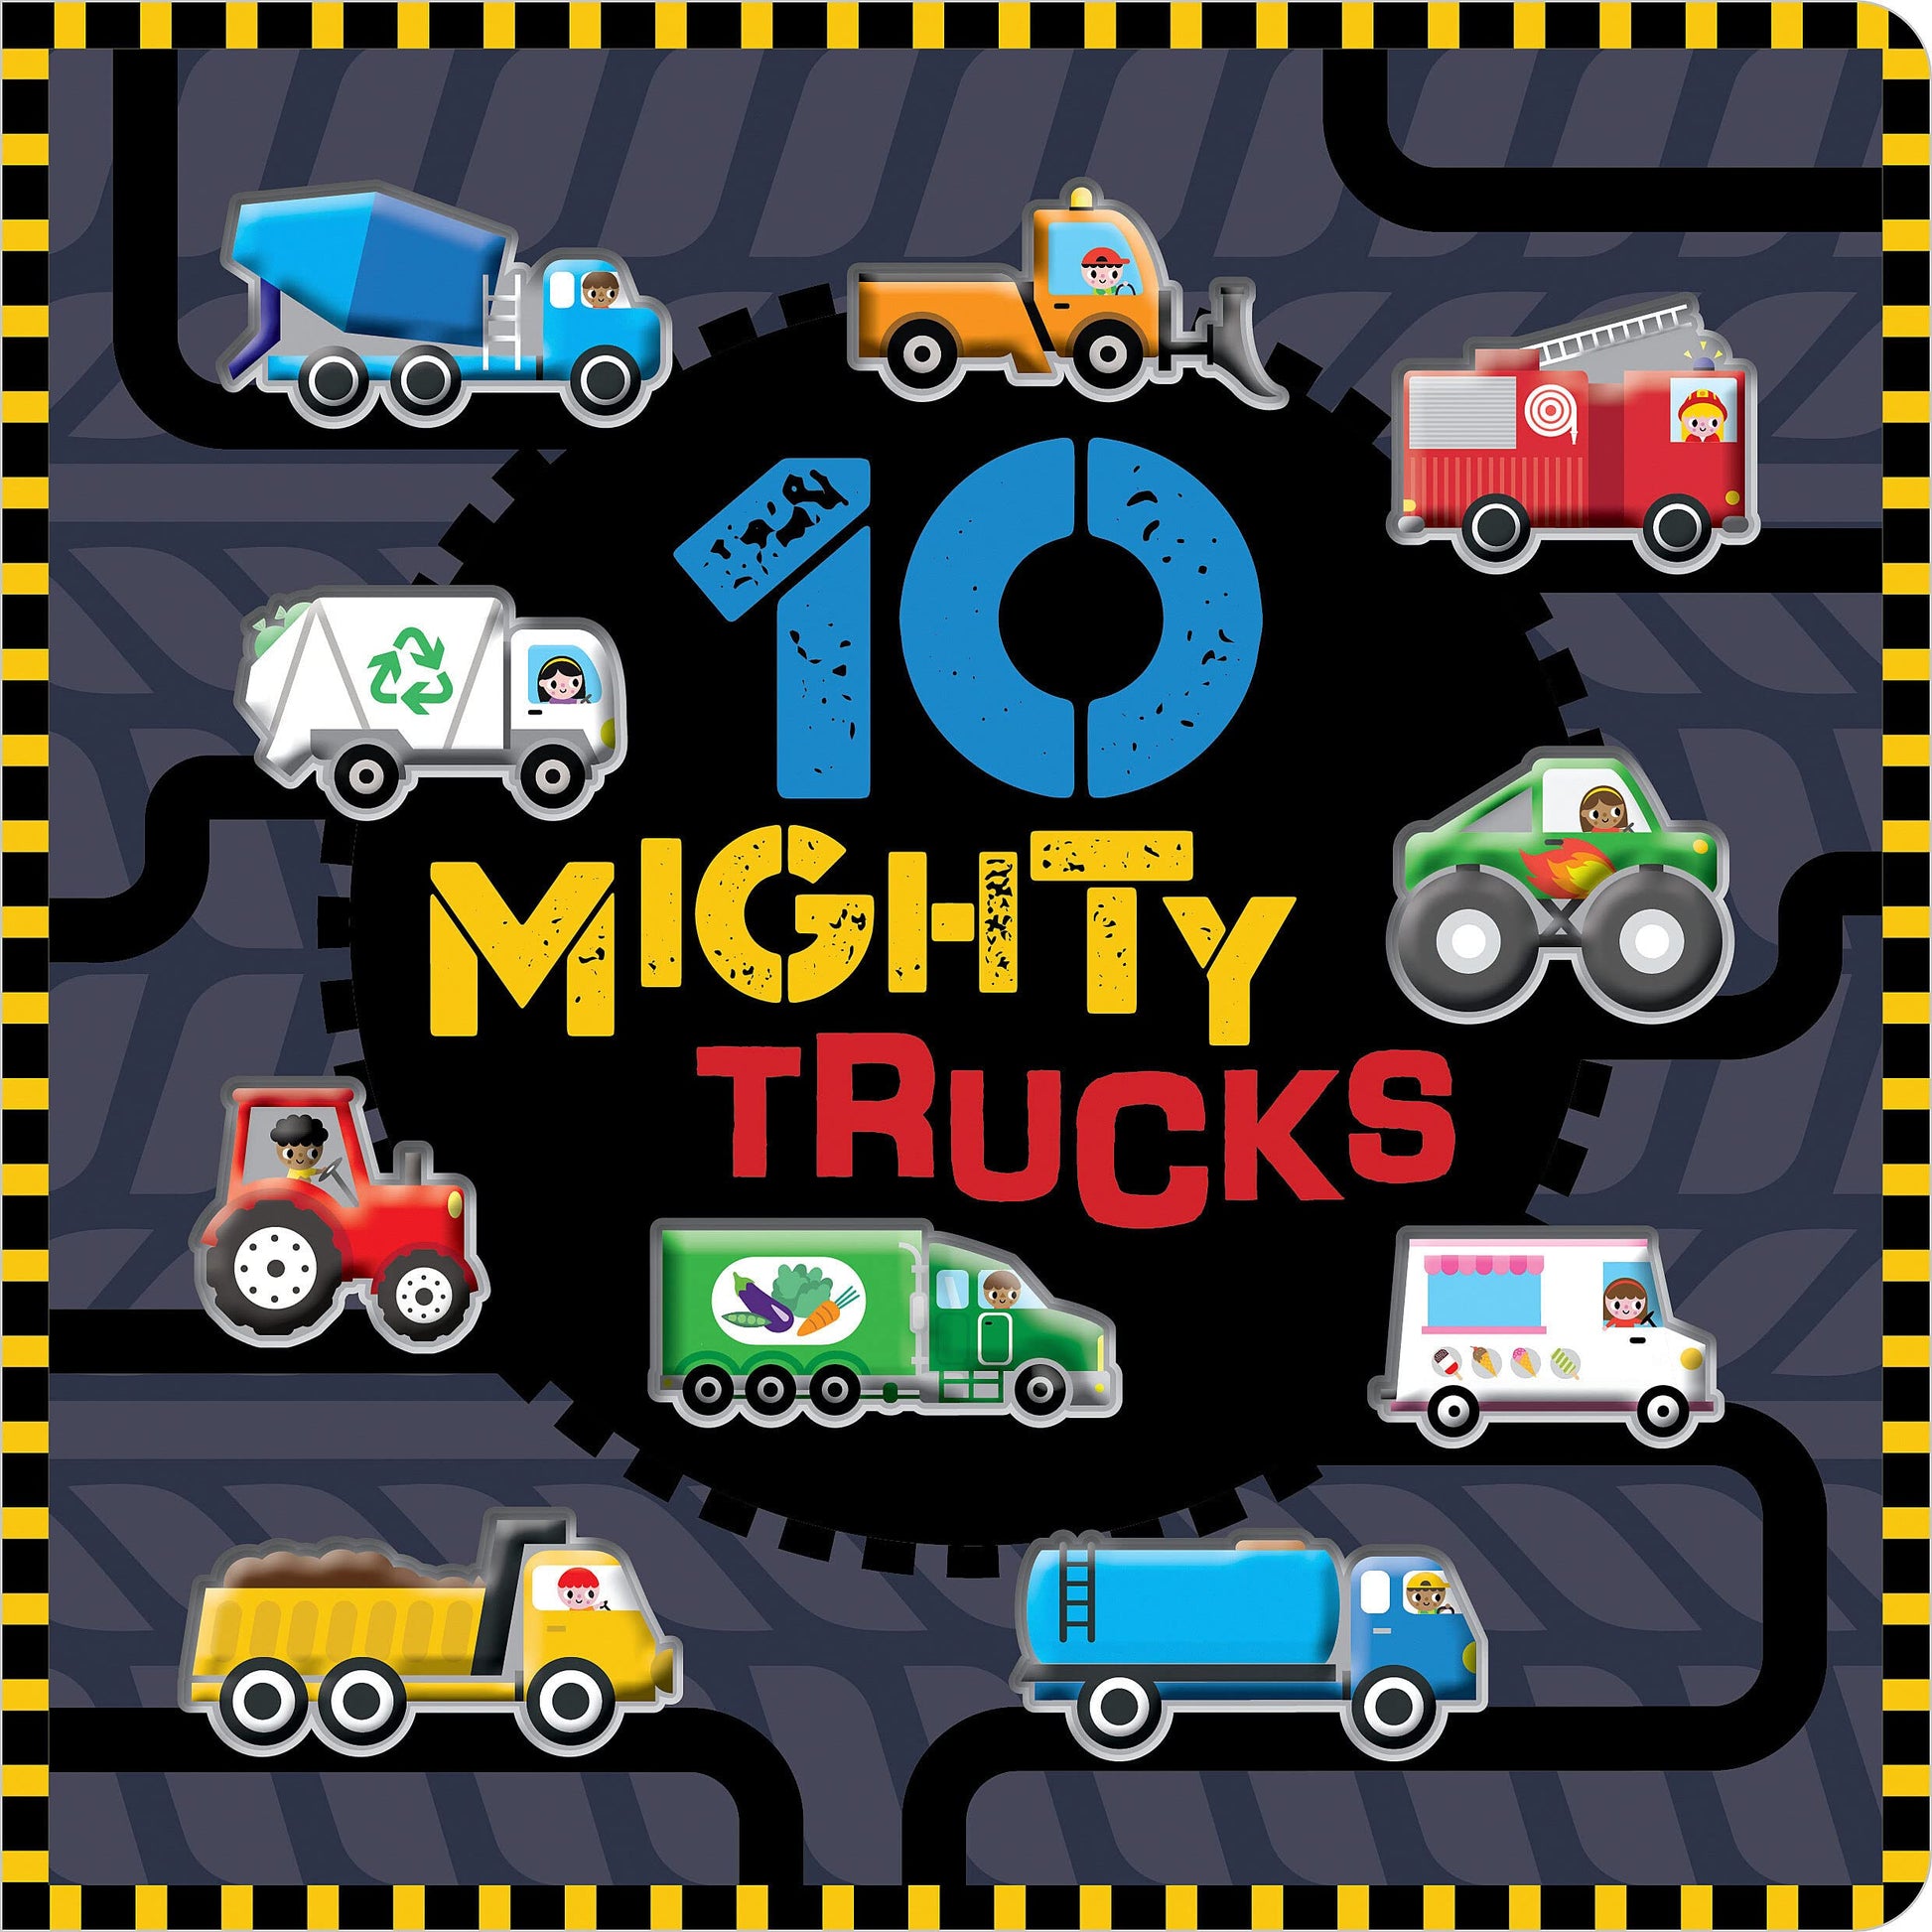 Make Believe Ideas Books 10 Mighty Trucks